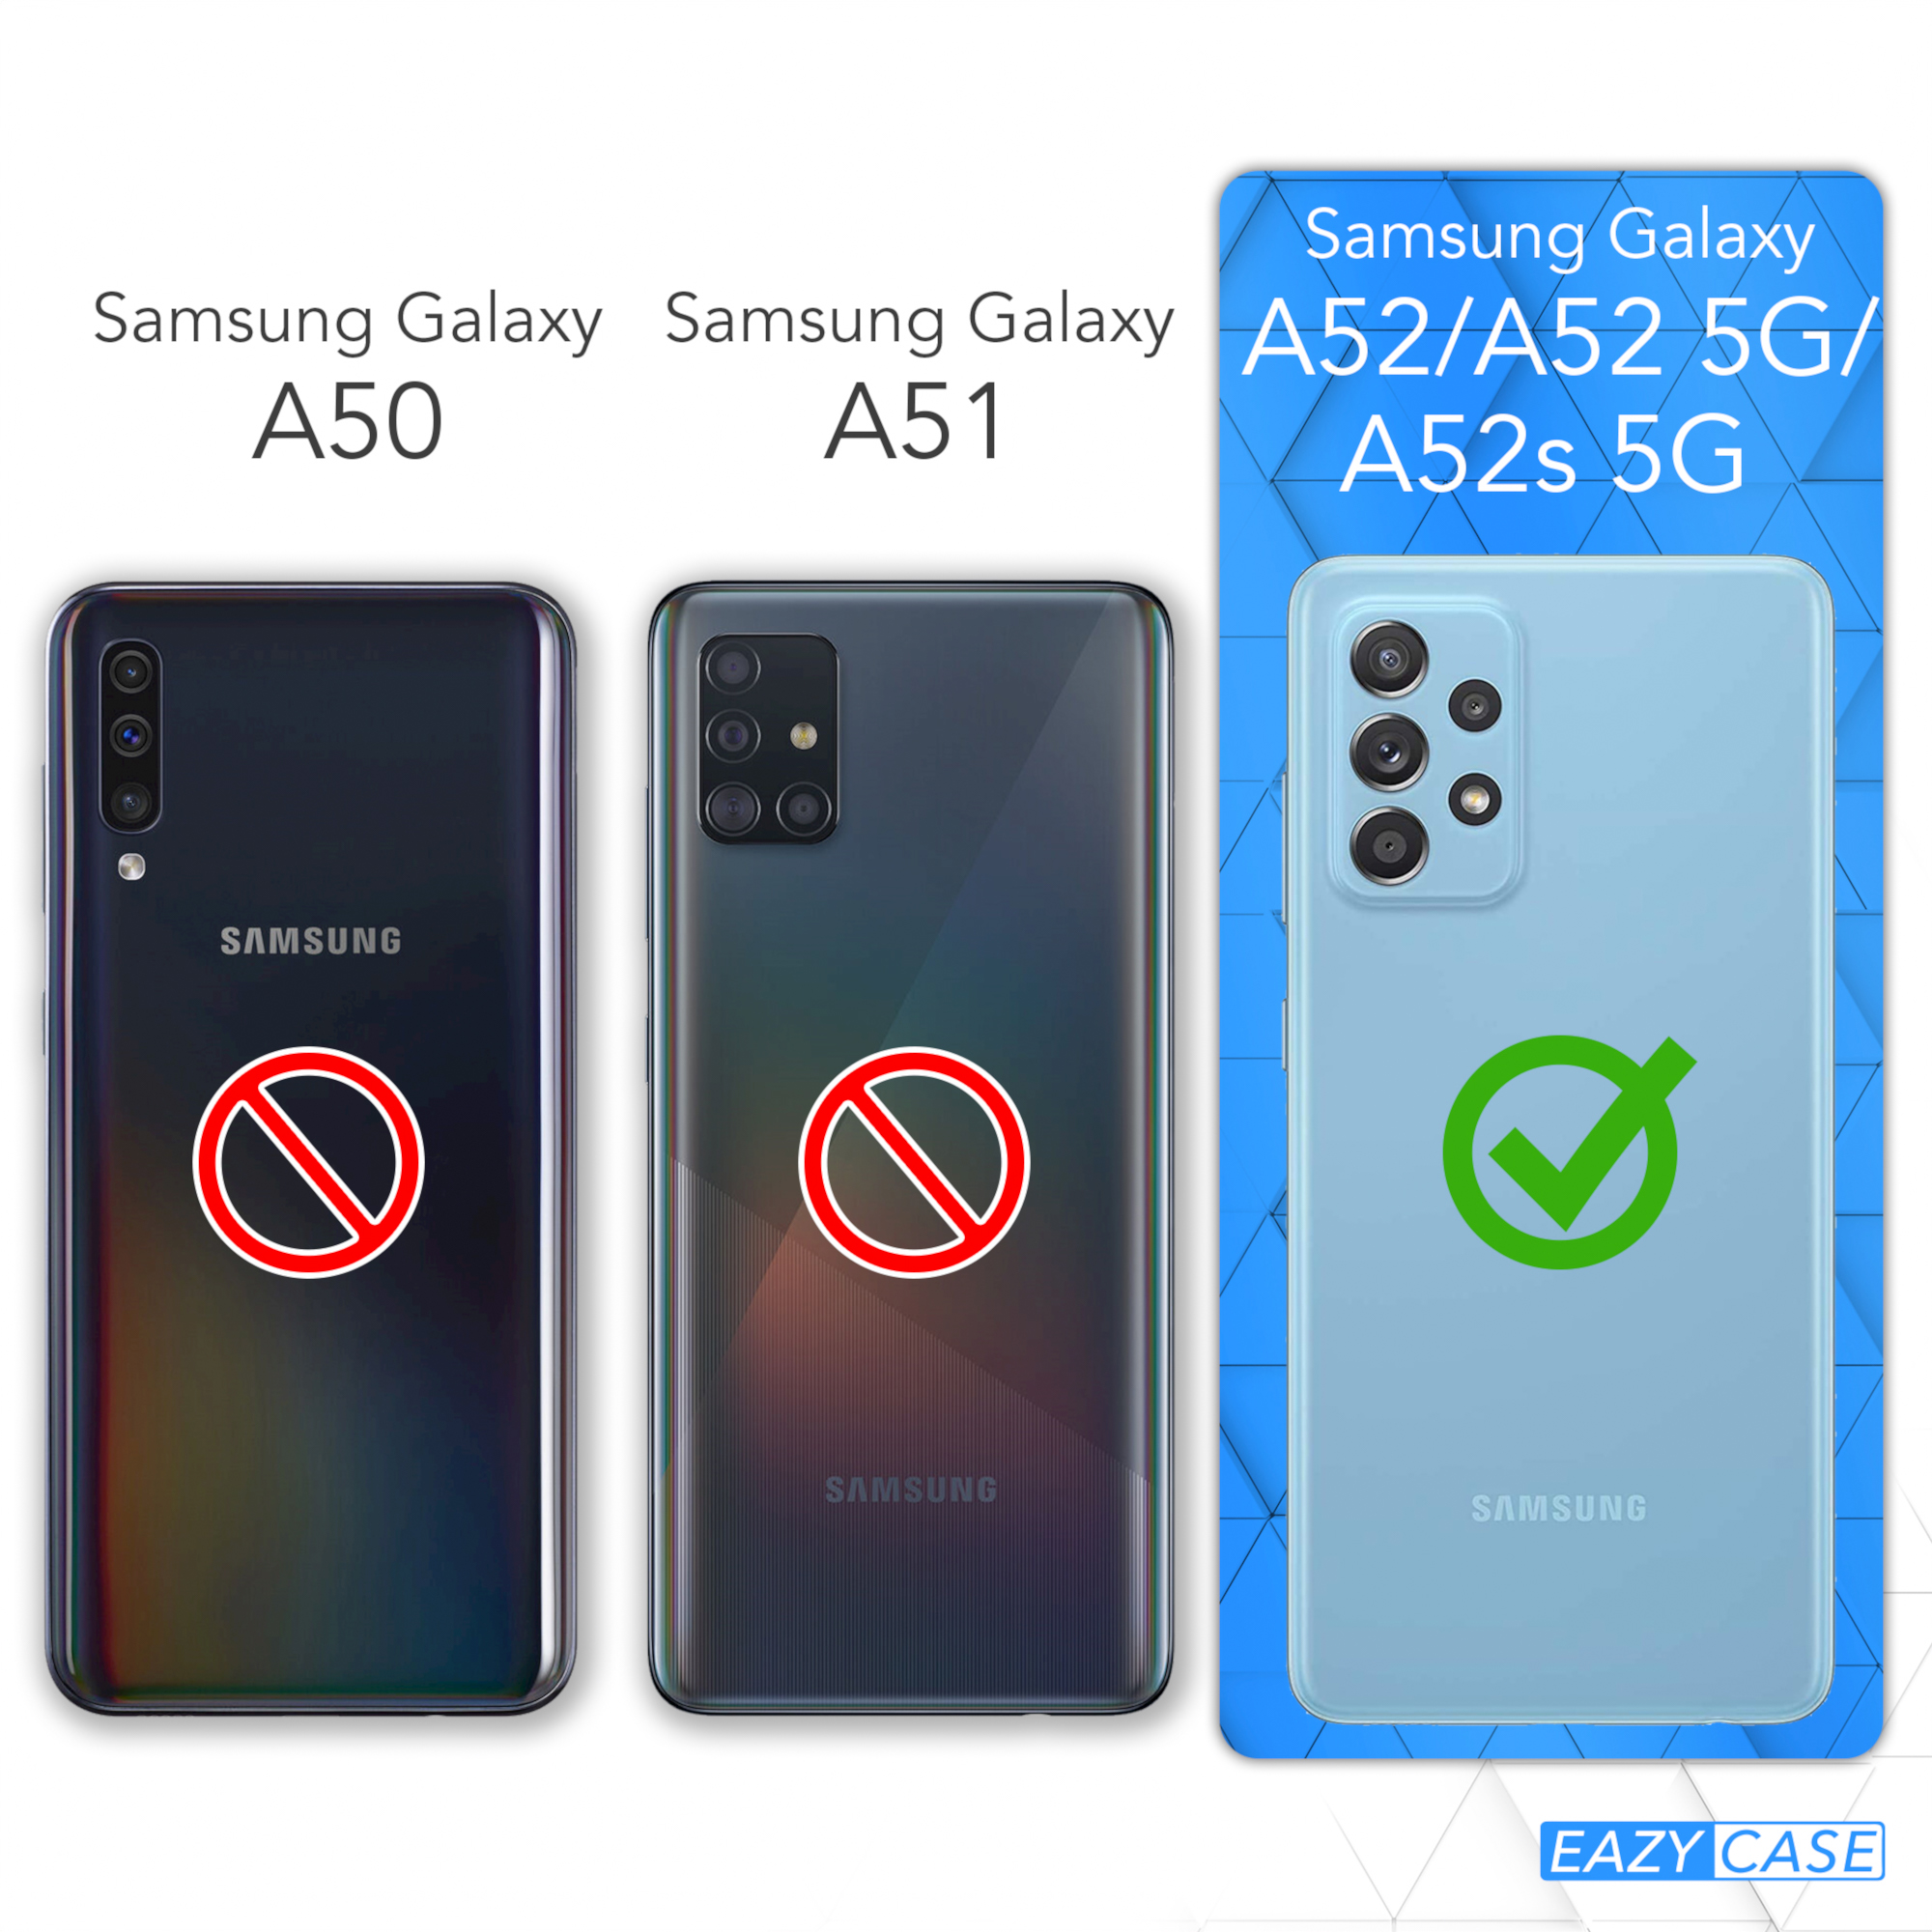 A52s CASE Kette Transparente / / Galaxy Samsung, unifarbend, Altrosa 5G, mit runder A52 Coral 5G EAZY Handyhülle / A52 Umhängetasche,